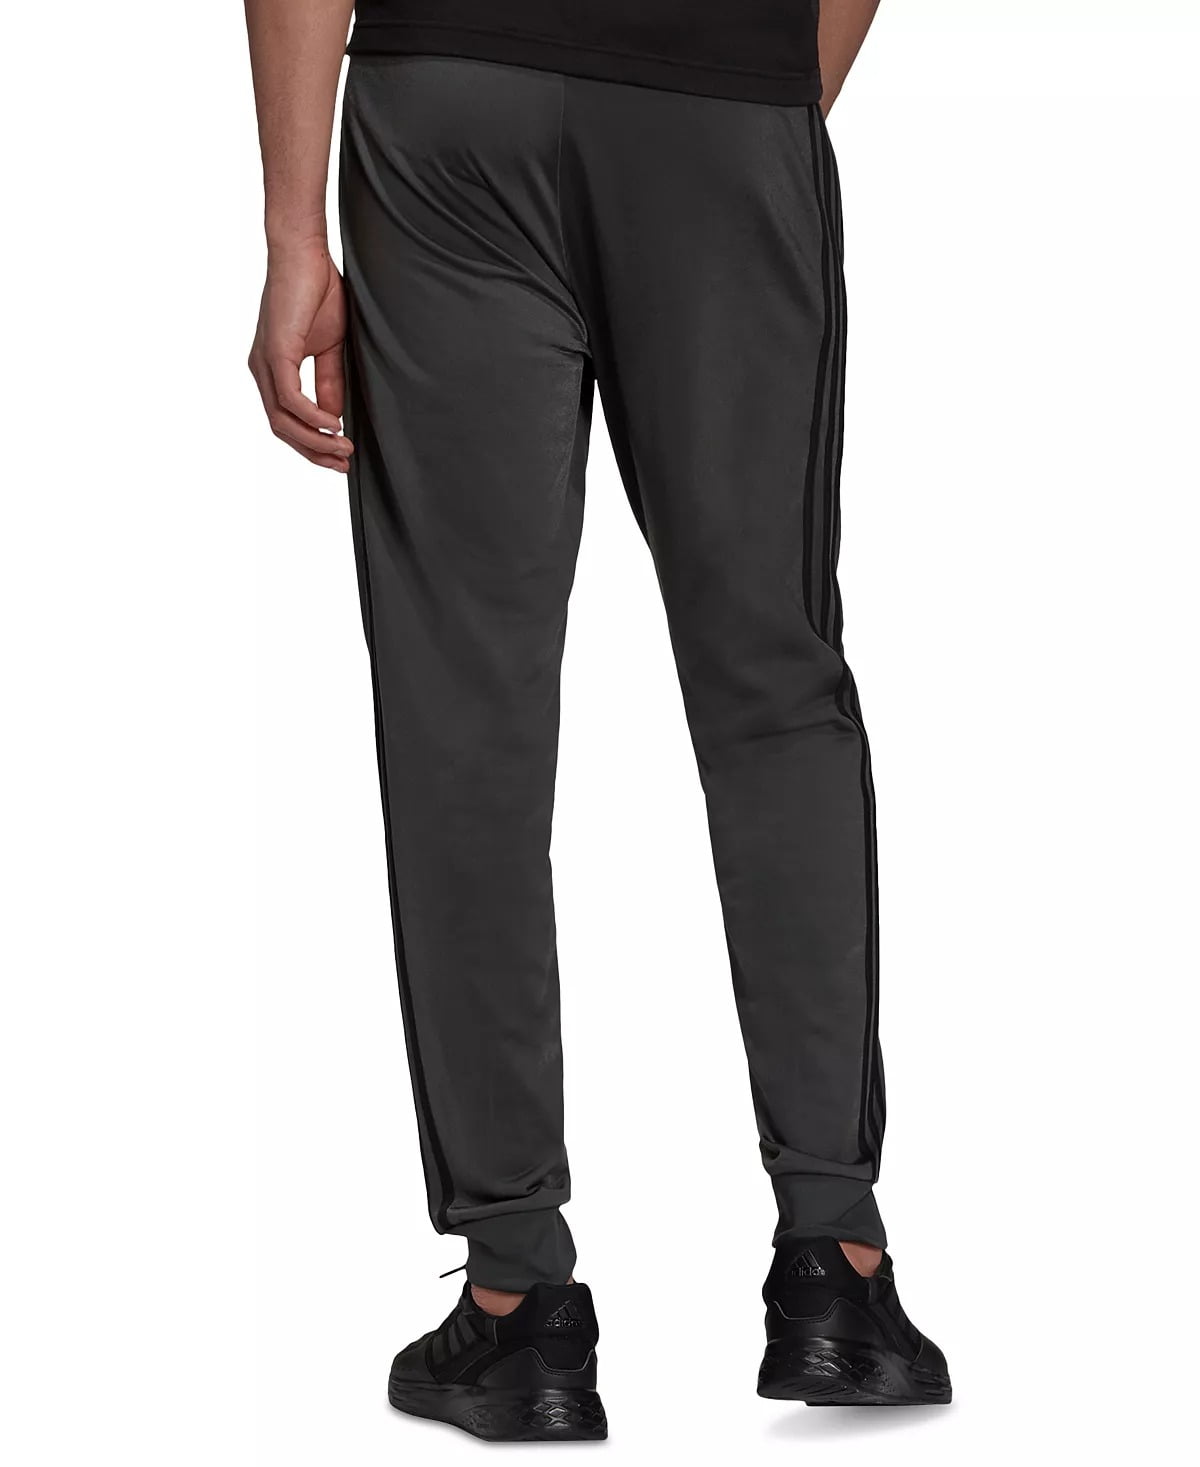 Adidas GREY Men's Tricot Jogger Pants, US Large